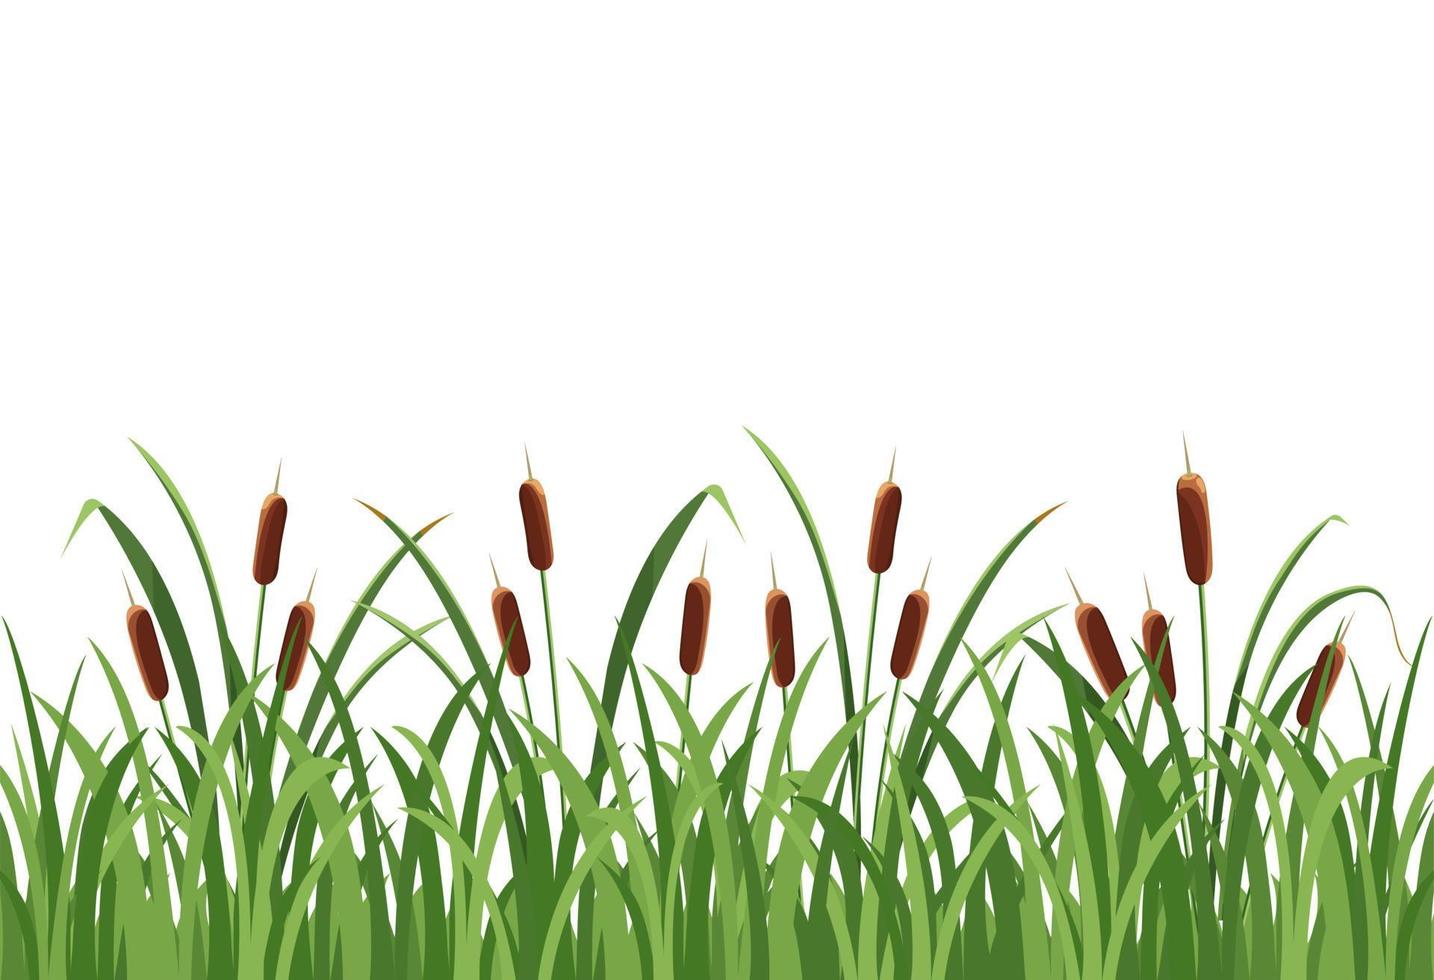 vassblomma, vass i gräset på vit bakgrund vektor